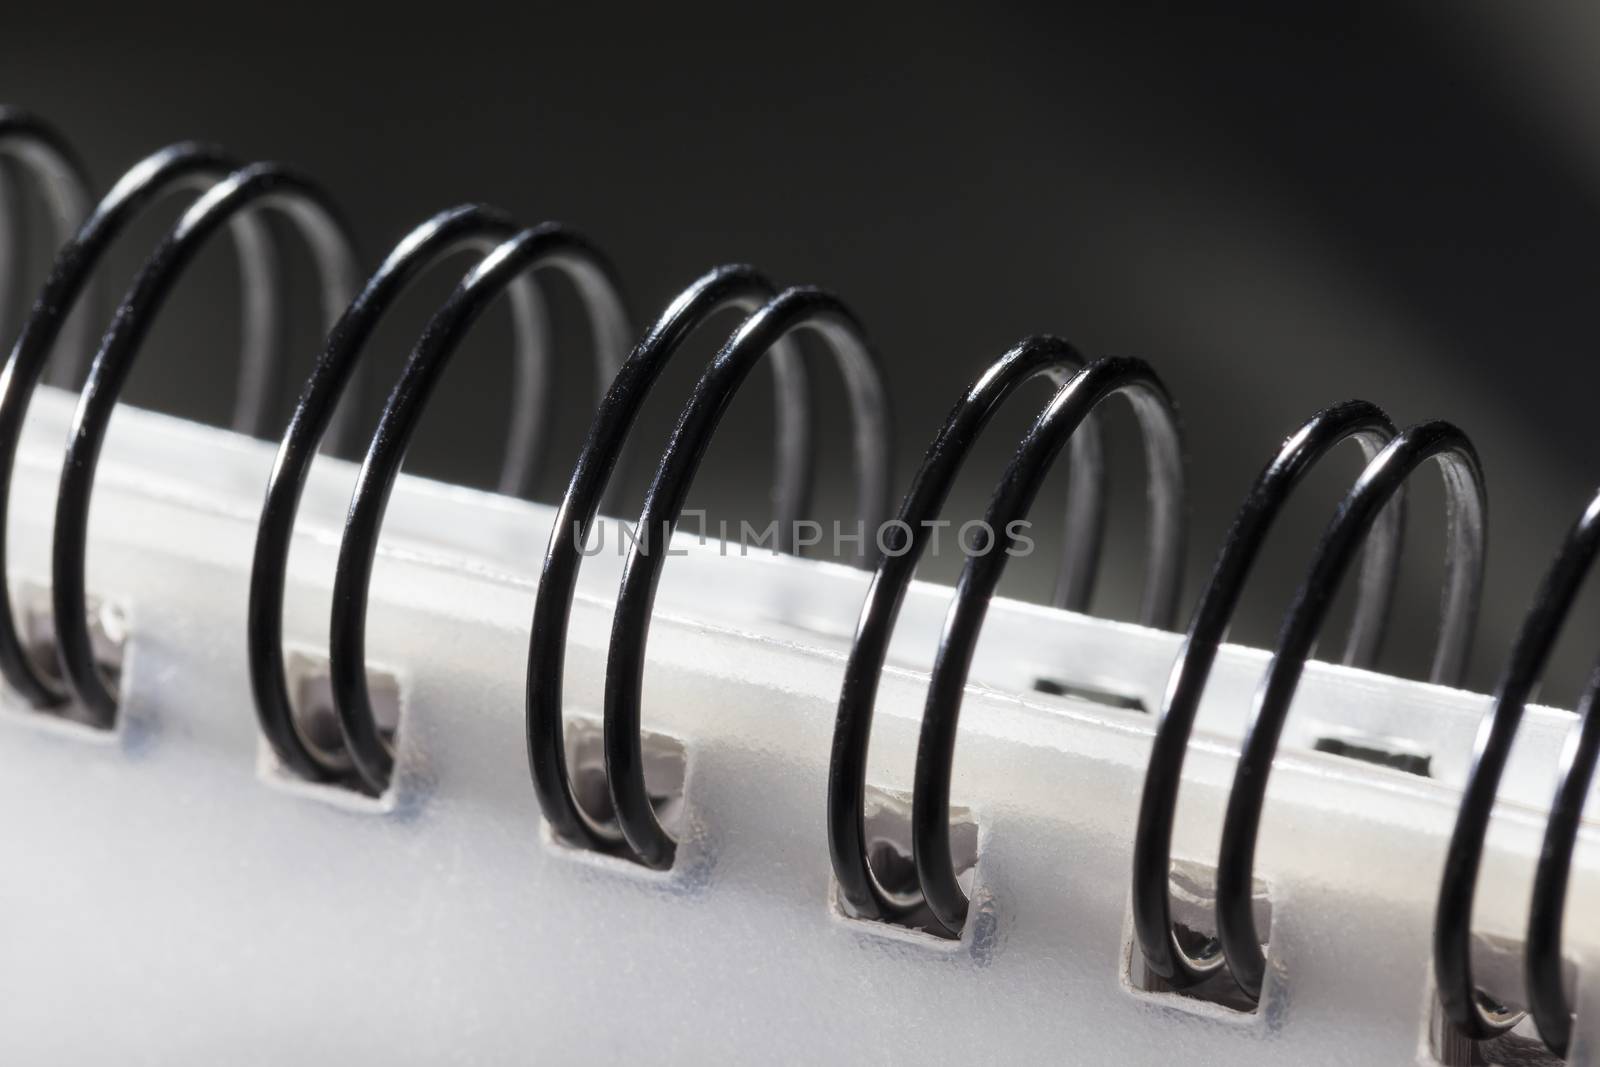 Wire binding to keep organized by kievith